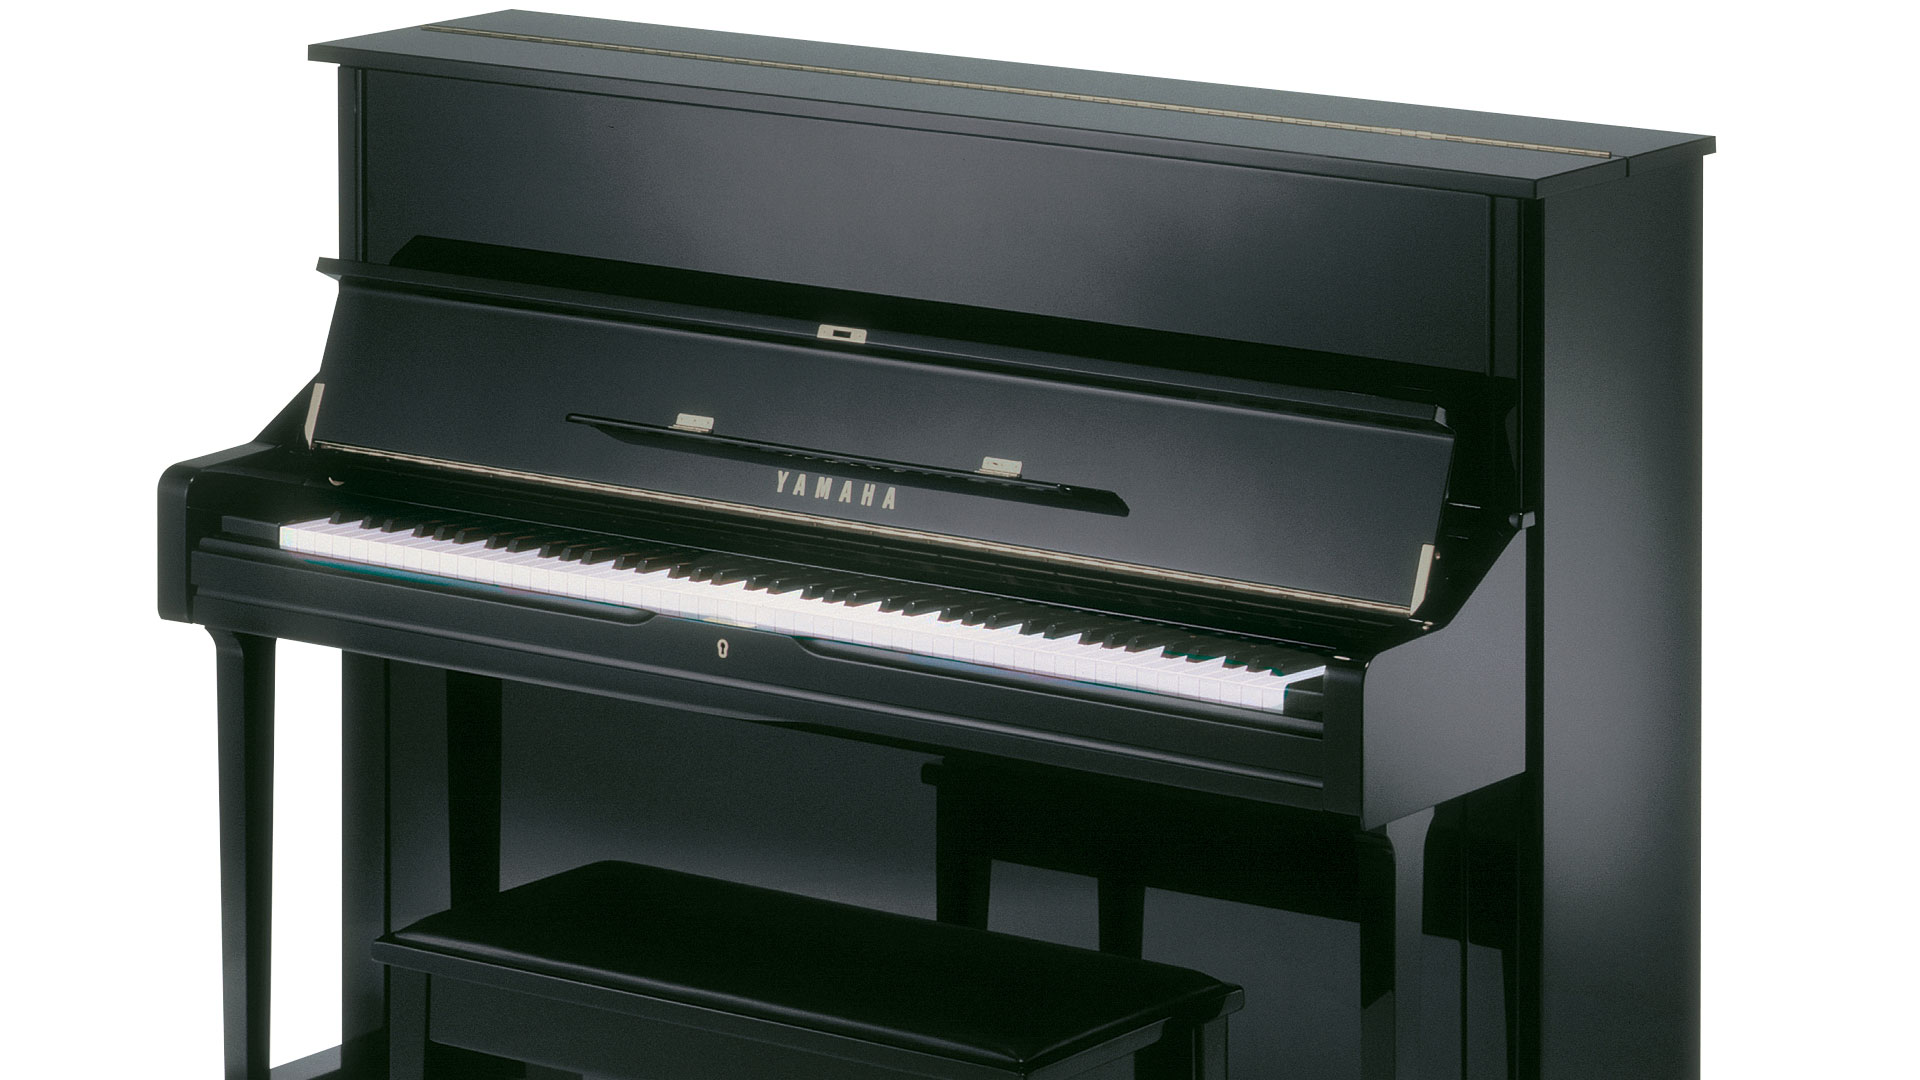 Yamaha piano Model u1